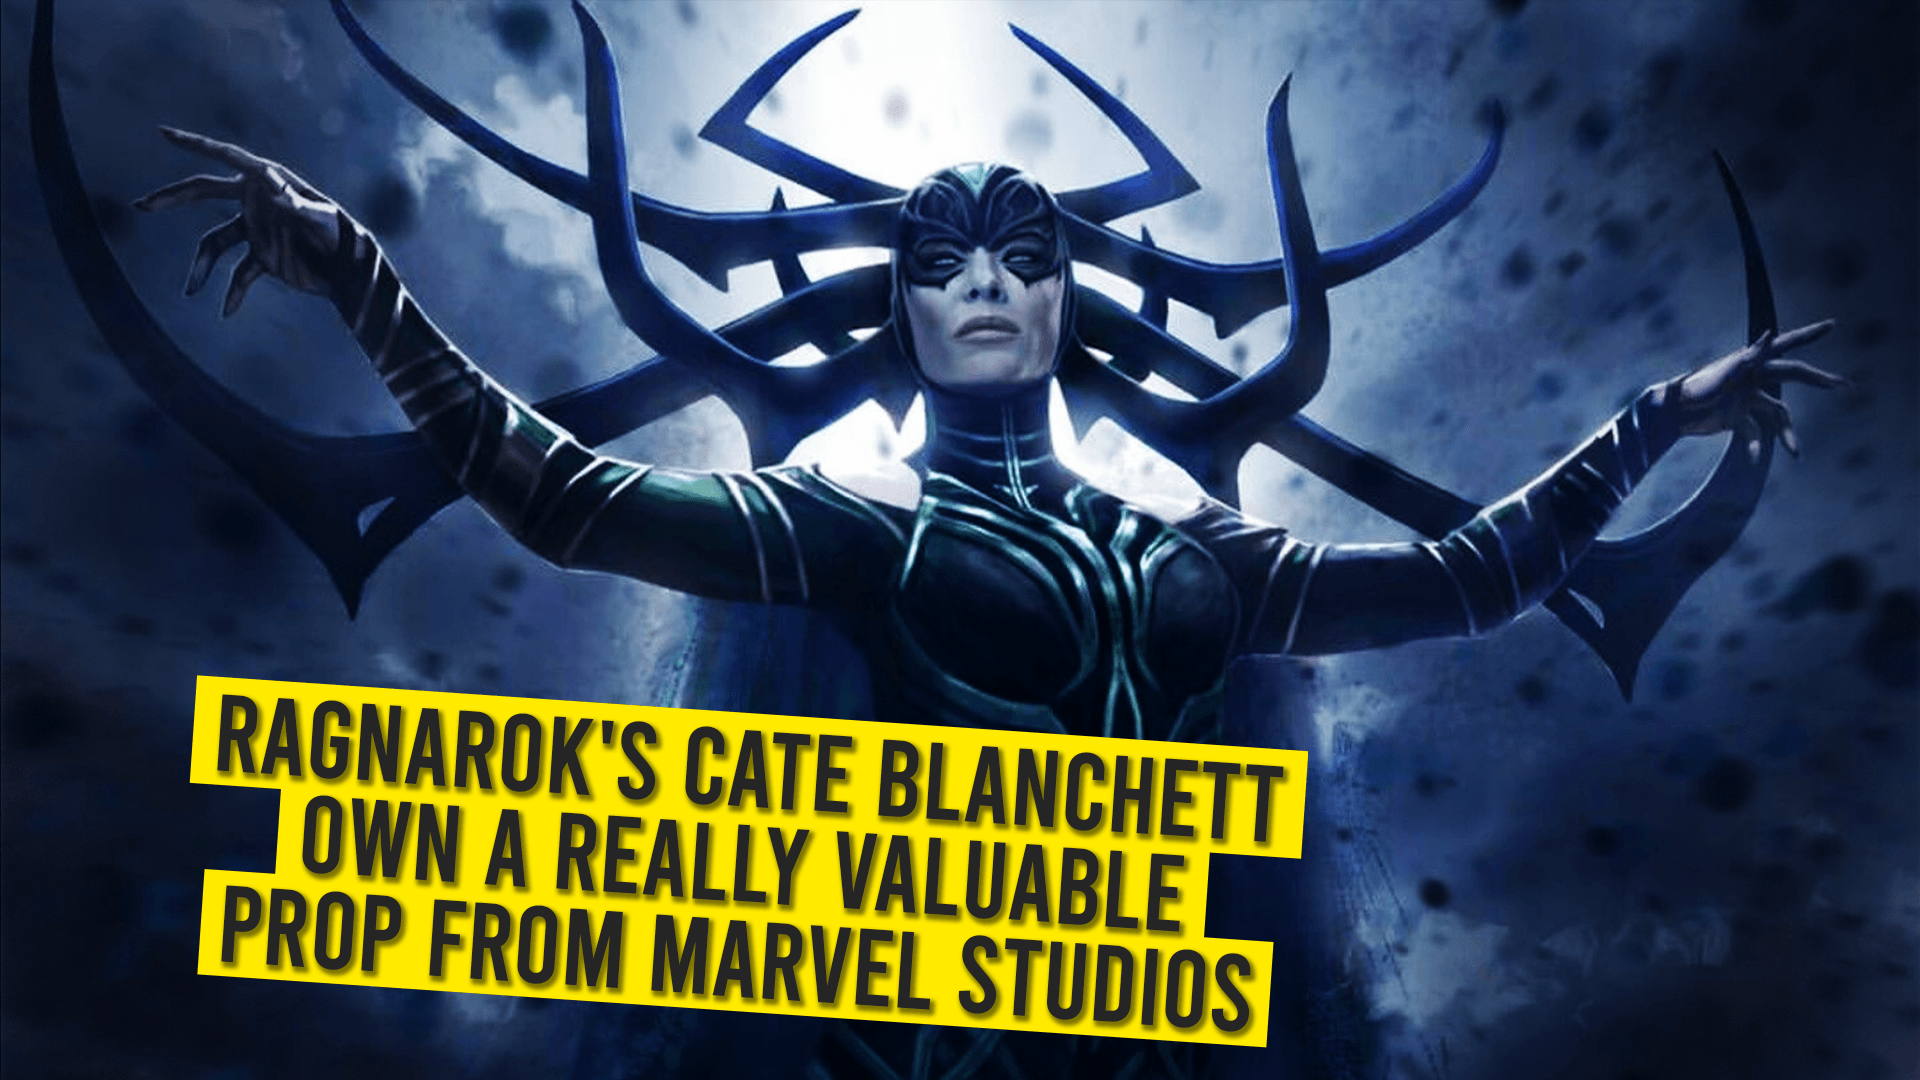 Ragnarok's Cate Blanchett Own A Really Valuable Prop From Marvel Studios